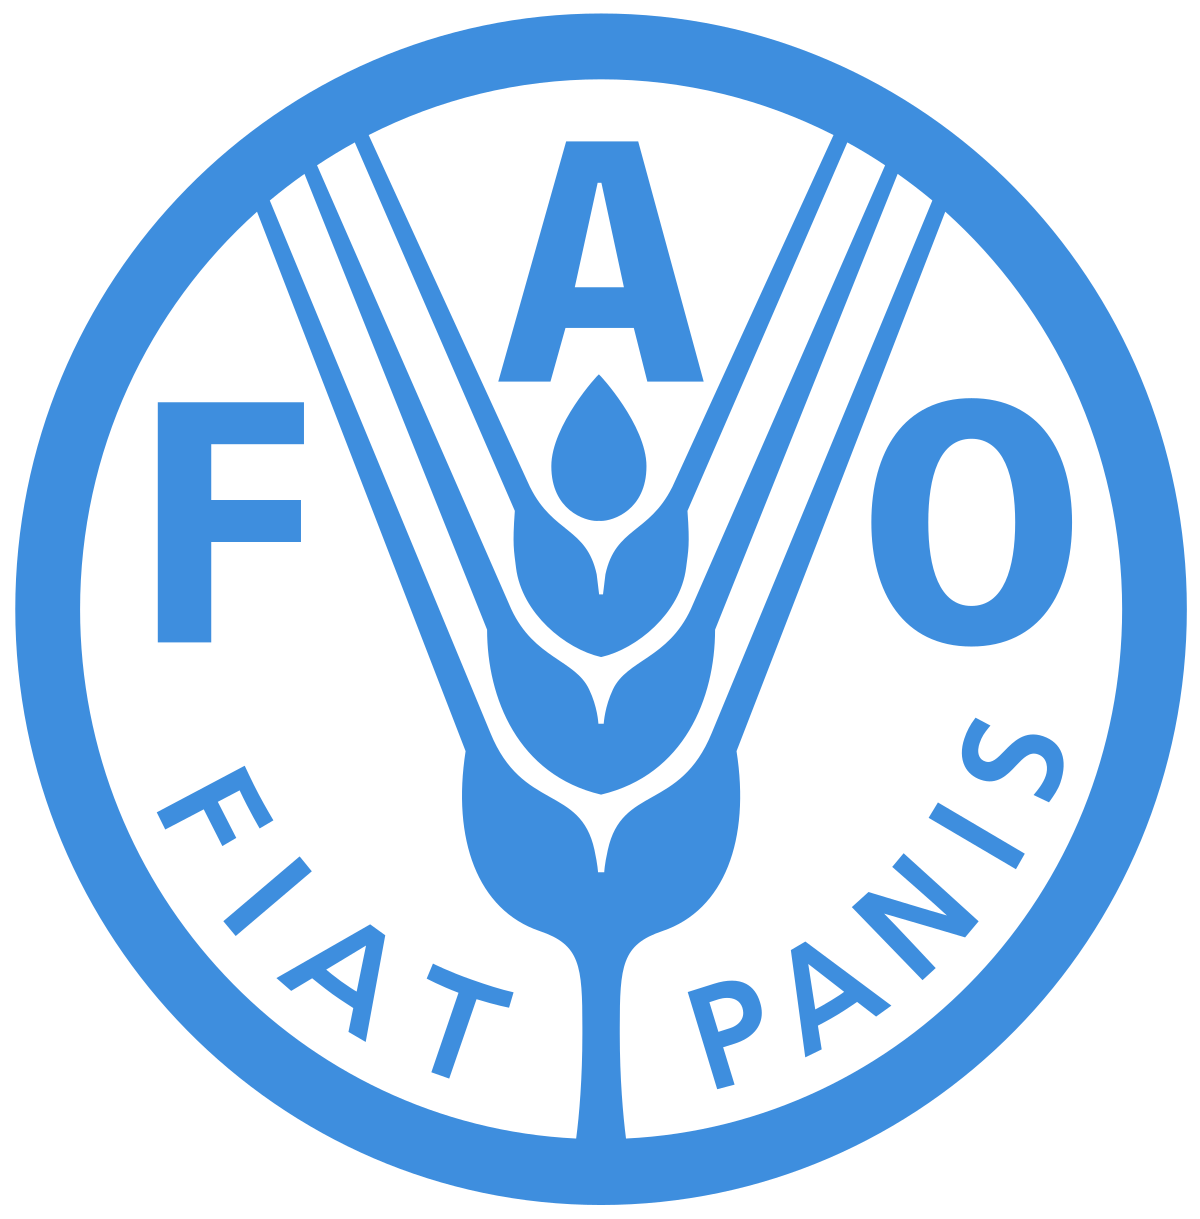 Emblema da FAO com o seu lema latino, Fiat Panis ("Haja po")